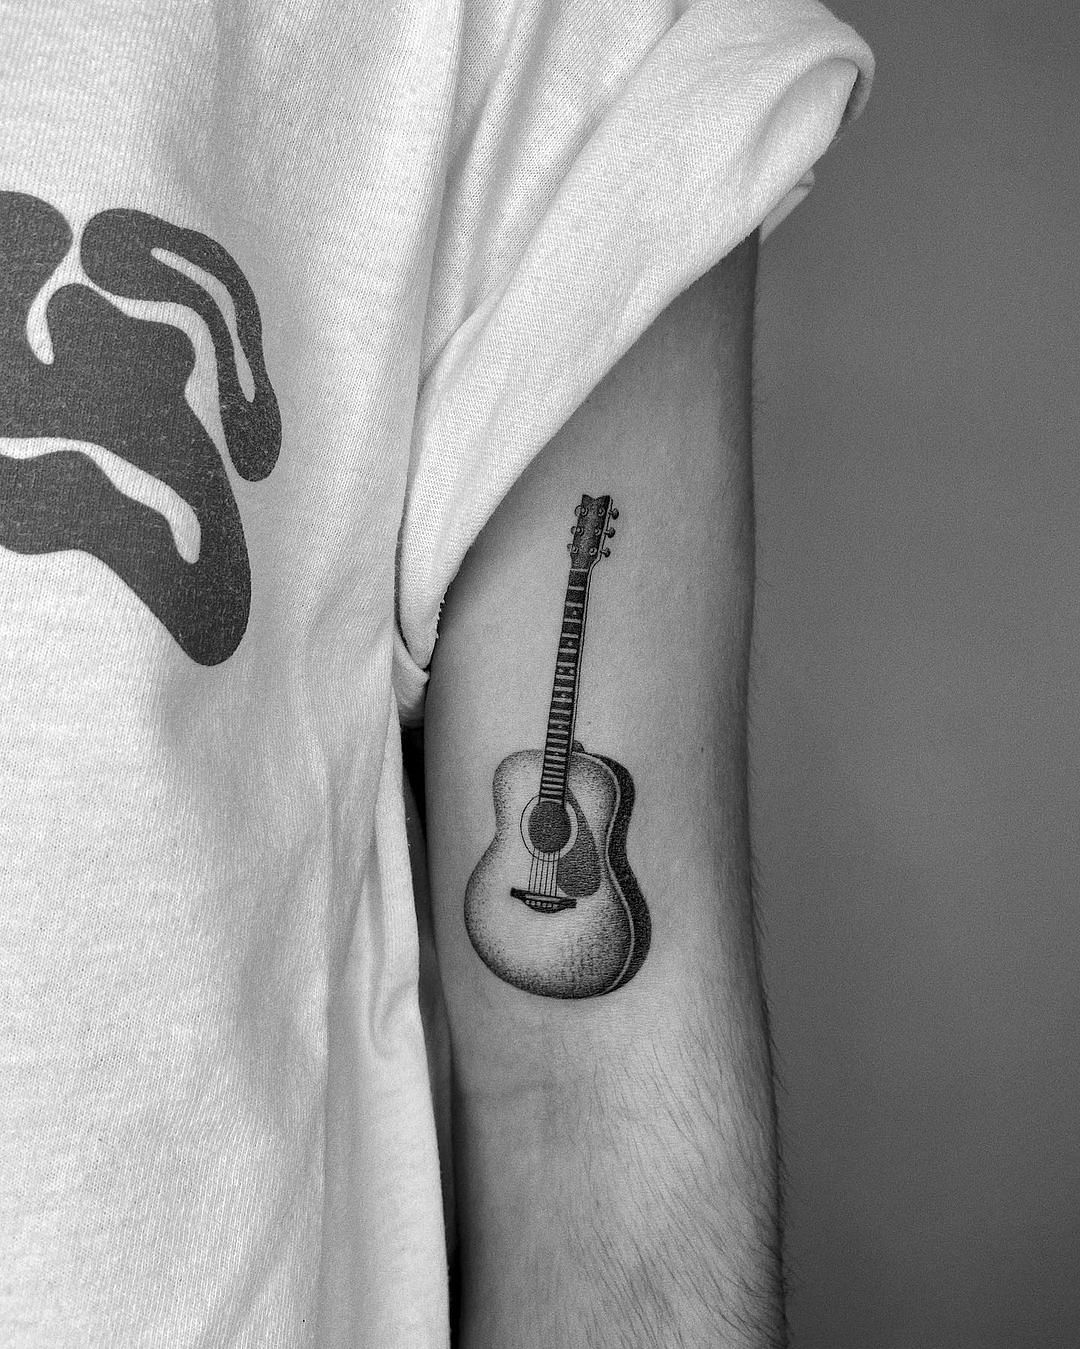 100 Coolest Music Tattoos for Men & Women - The Trend Spotter